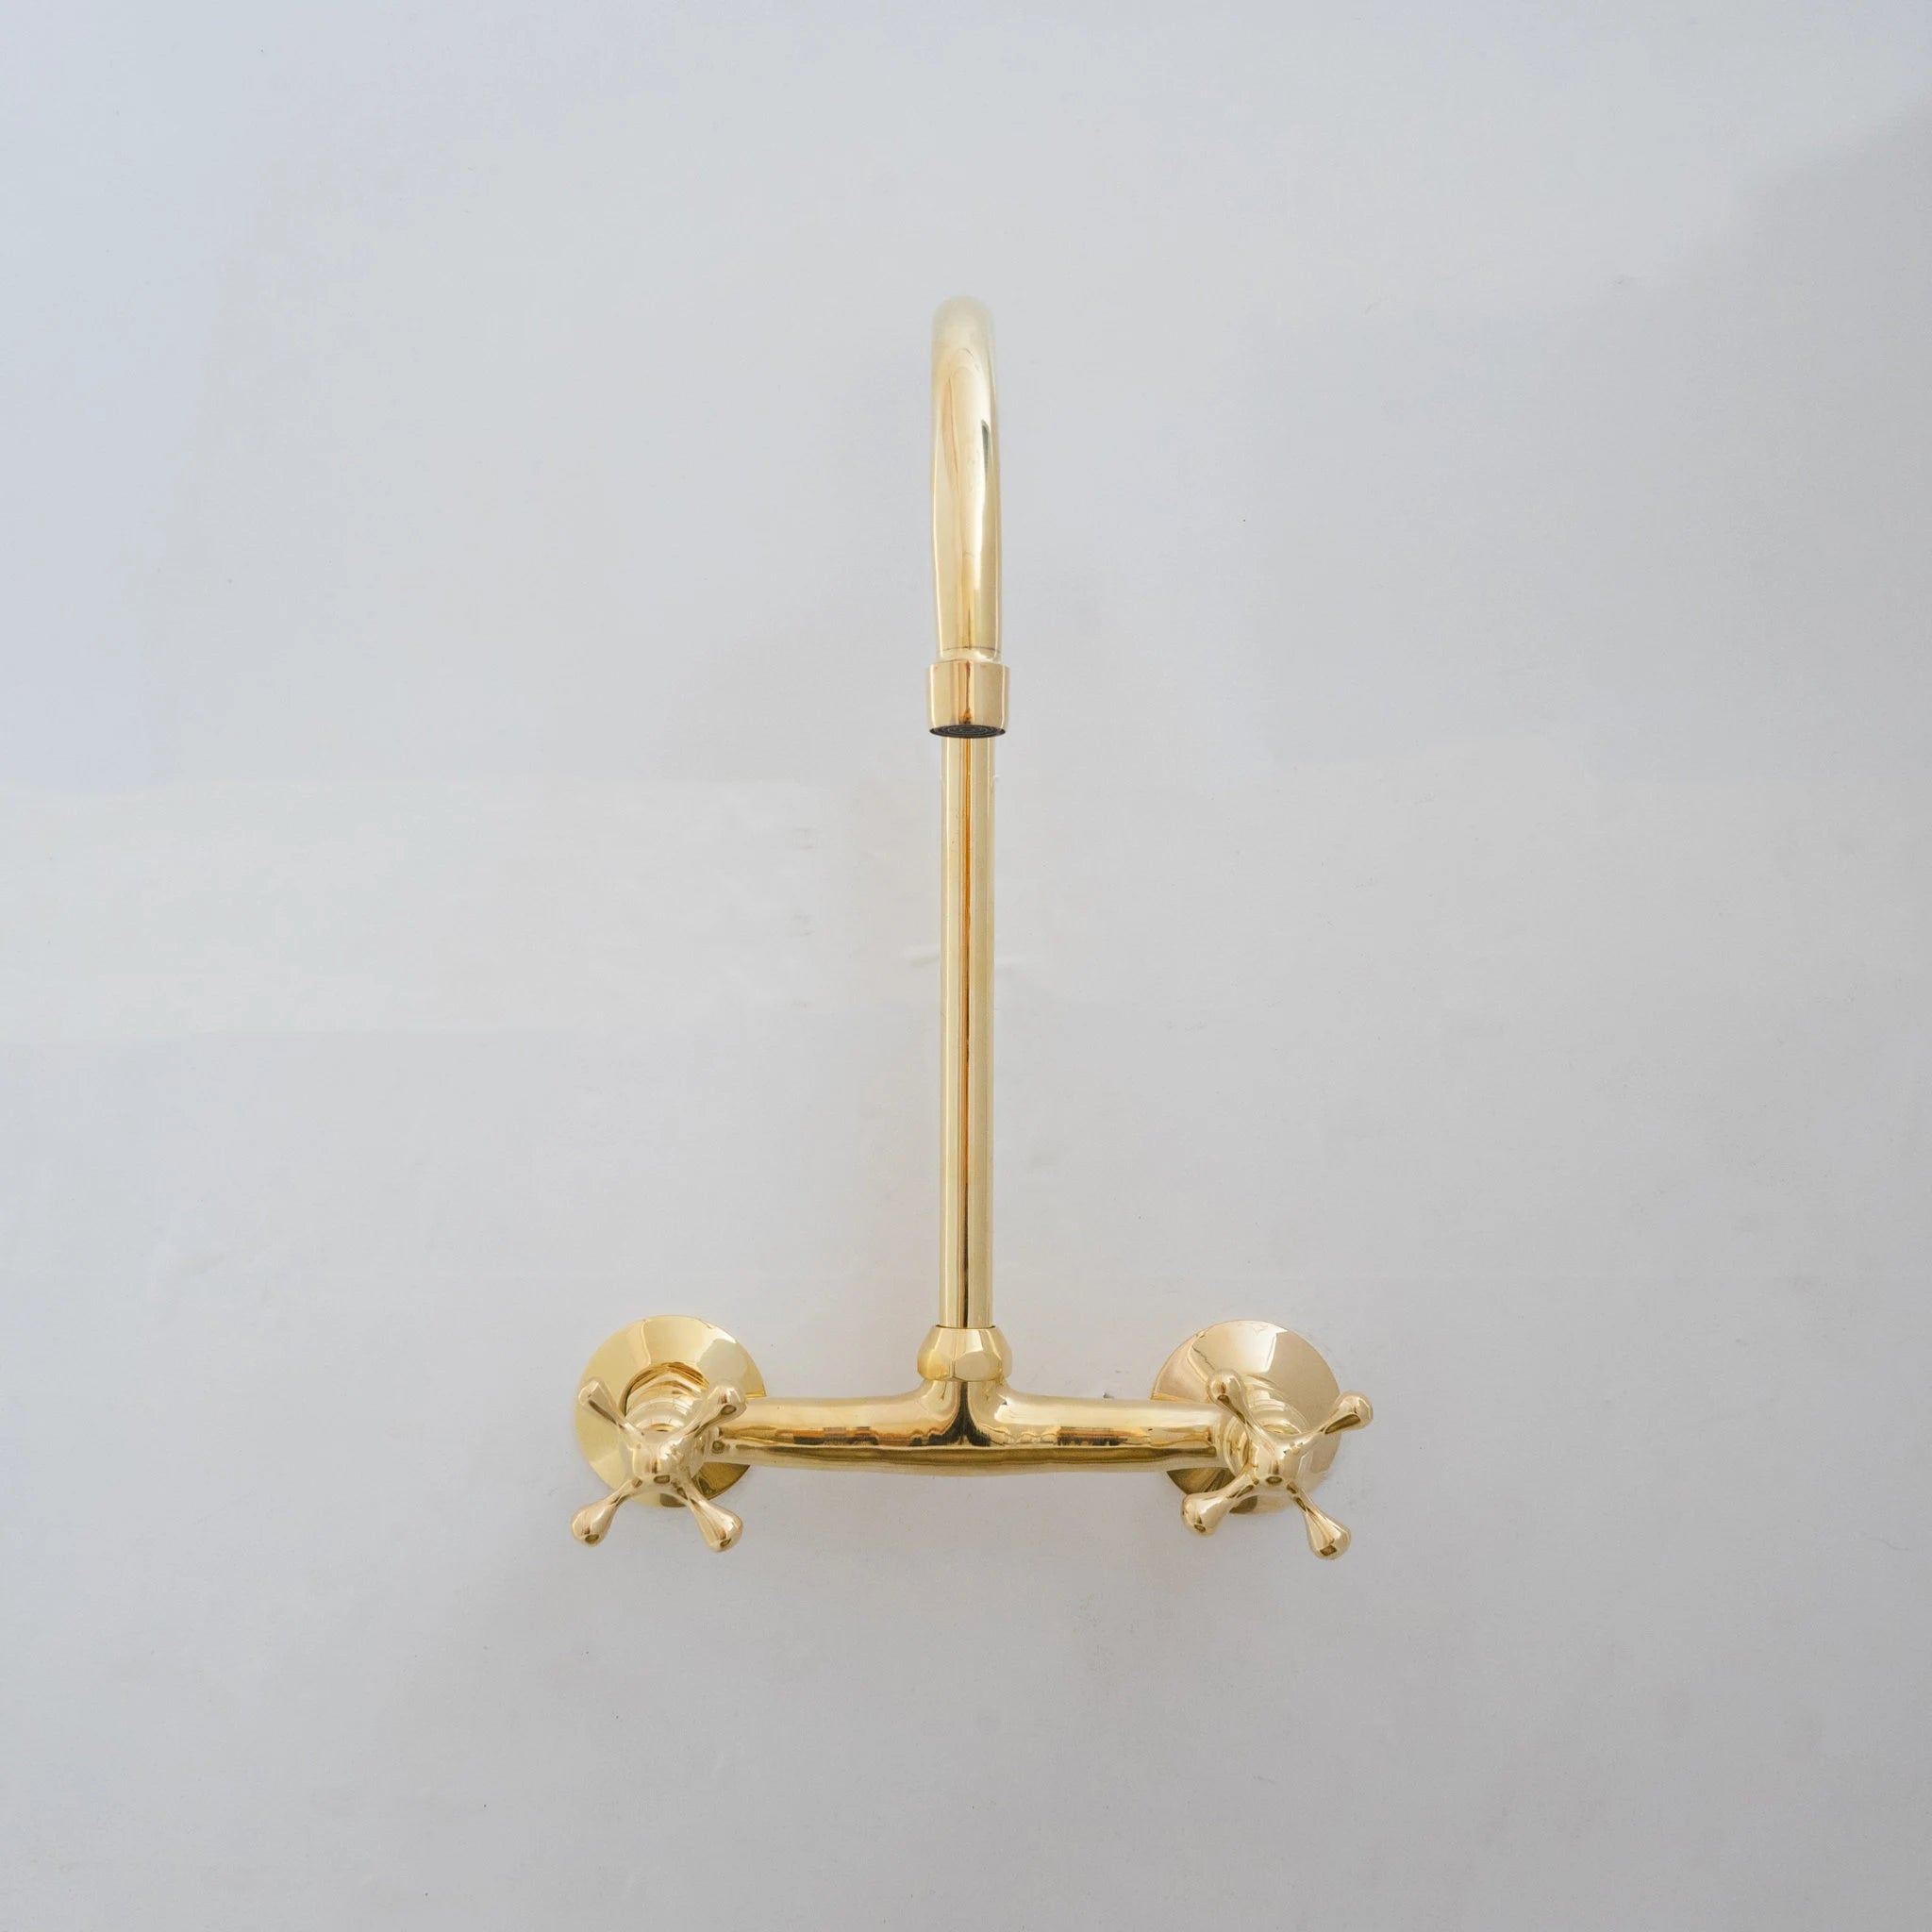 8" Unlacquered Brass Kitchen Wall Mount Faucet, Gooseneck Faucet